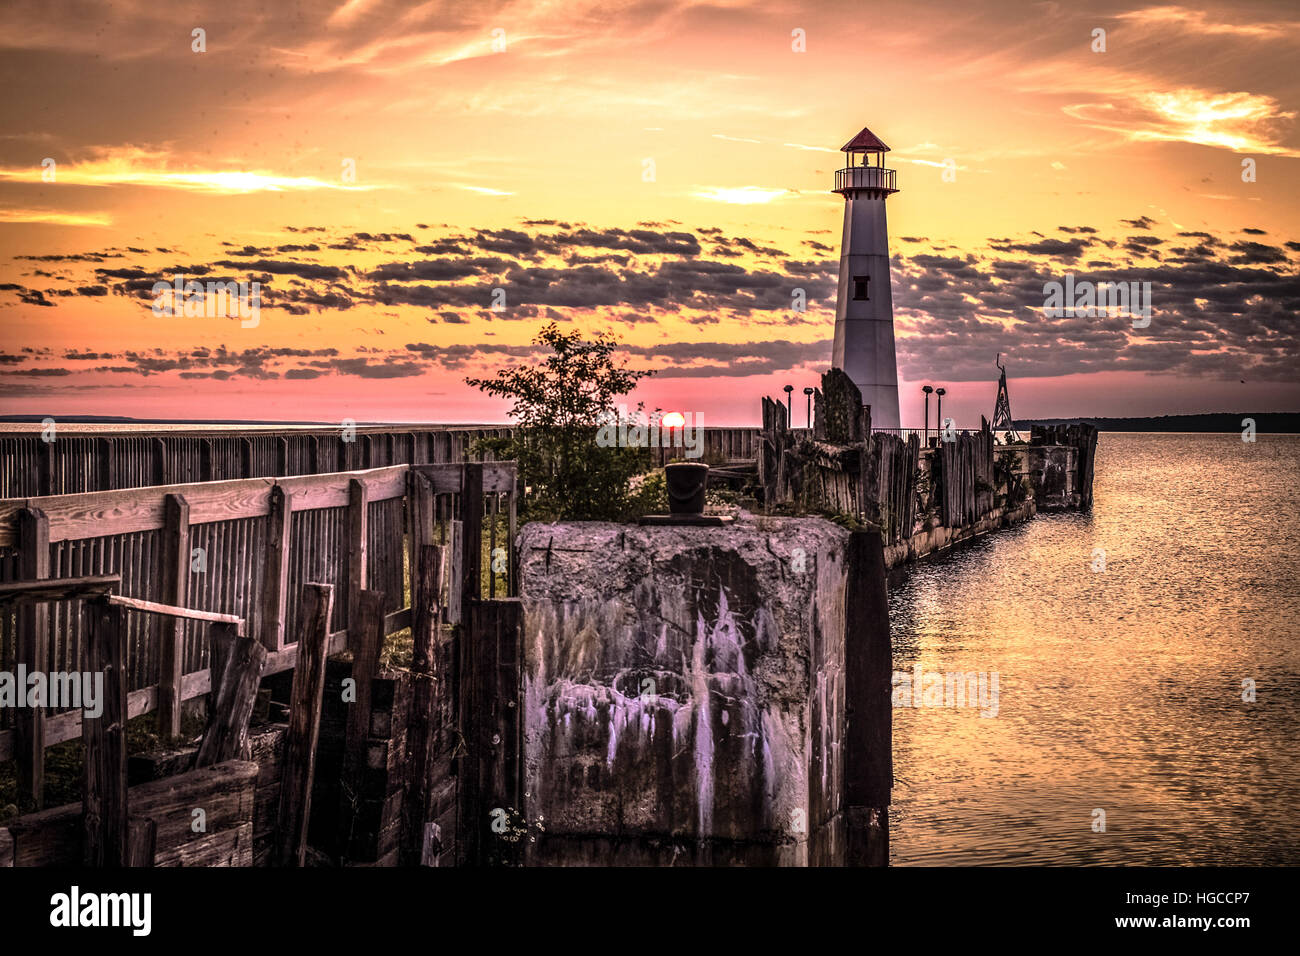 Coastal Lighthouse Sunrise. Sunrise horizon with a lighthouse and historic dock in the foreground in St. Ignace, Michigan. Stock Photo